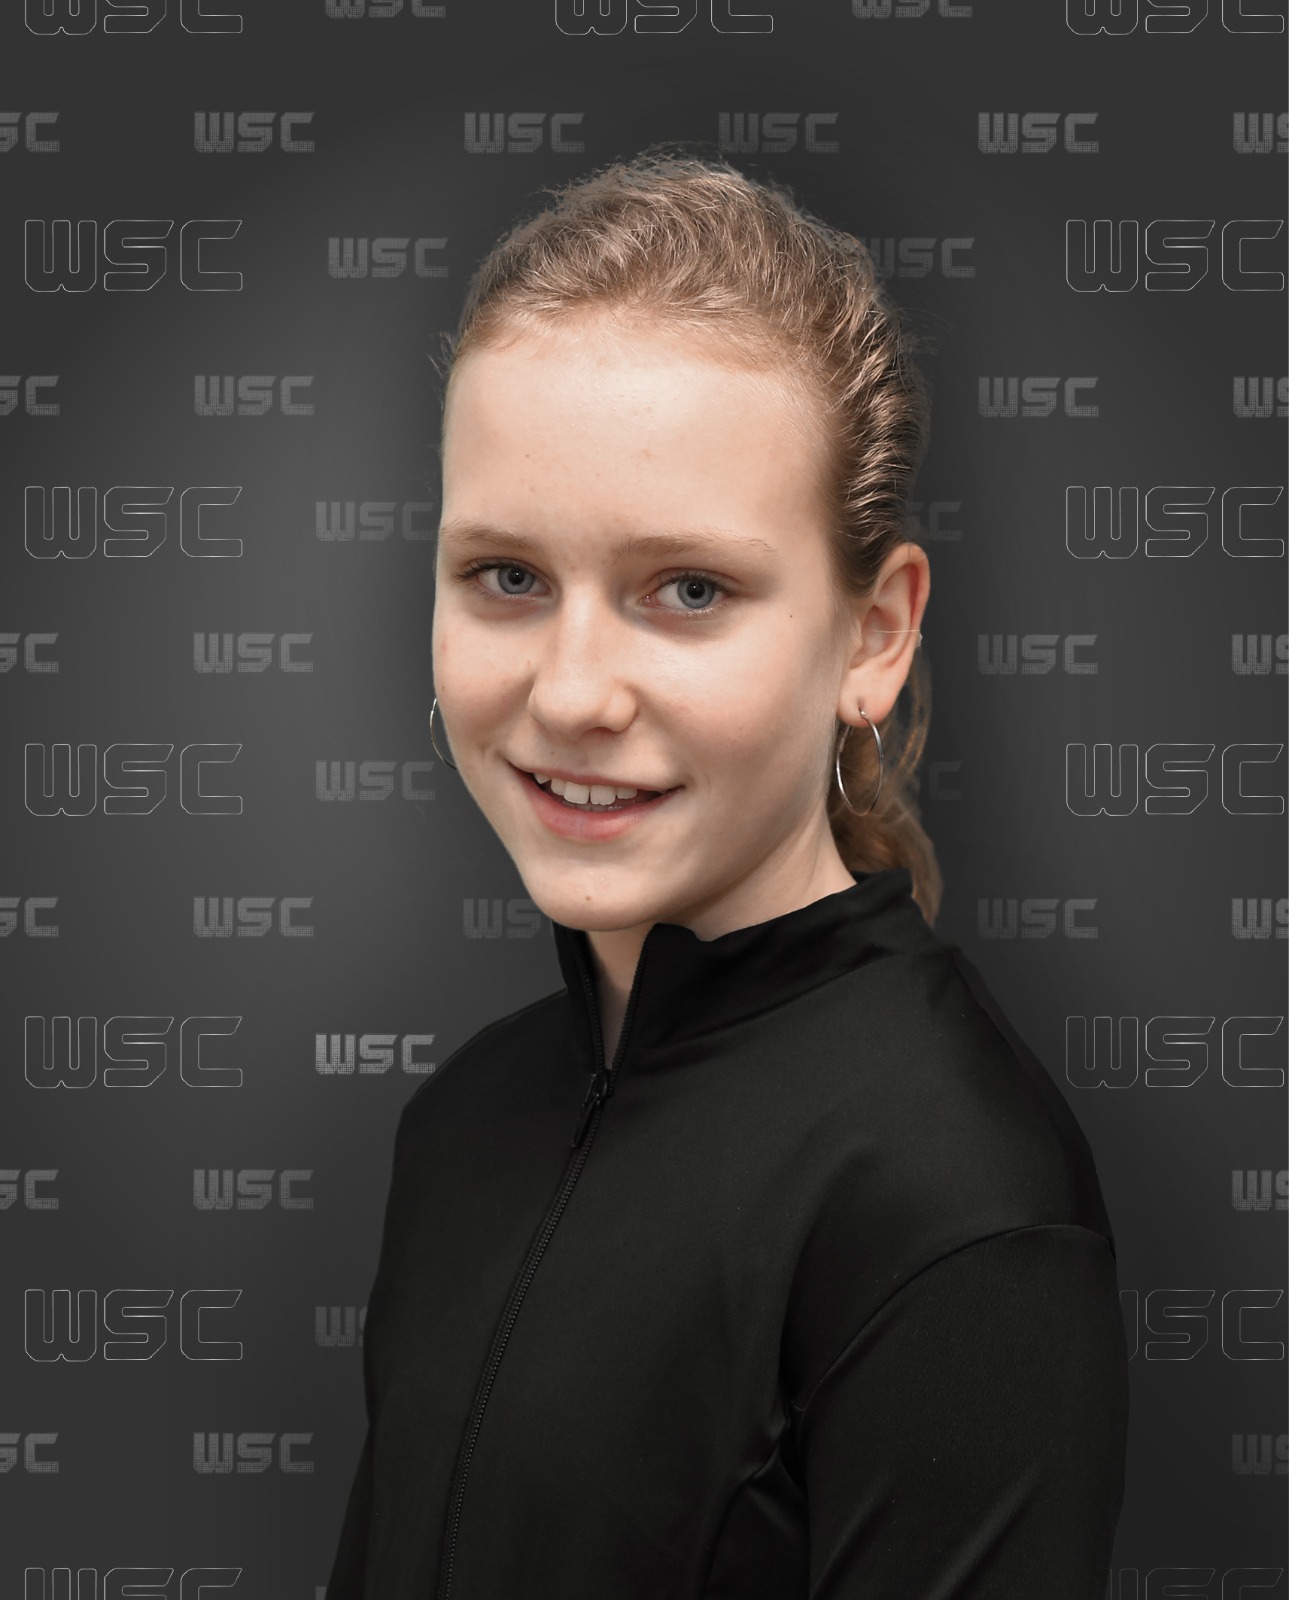 WSC Coaching Staff: Lina Hatje